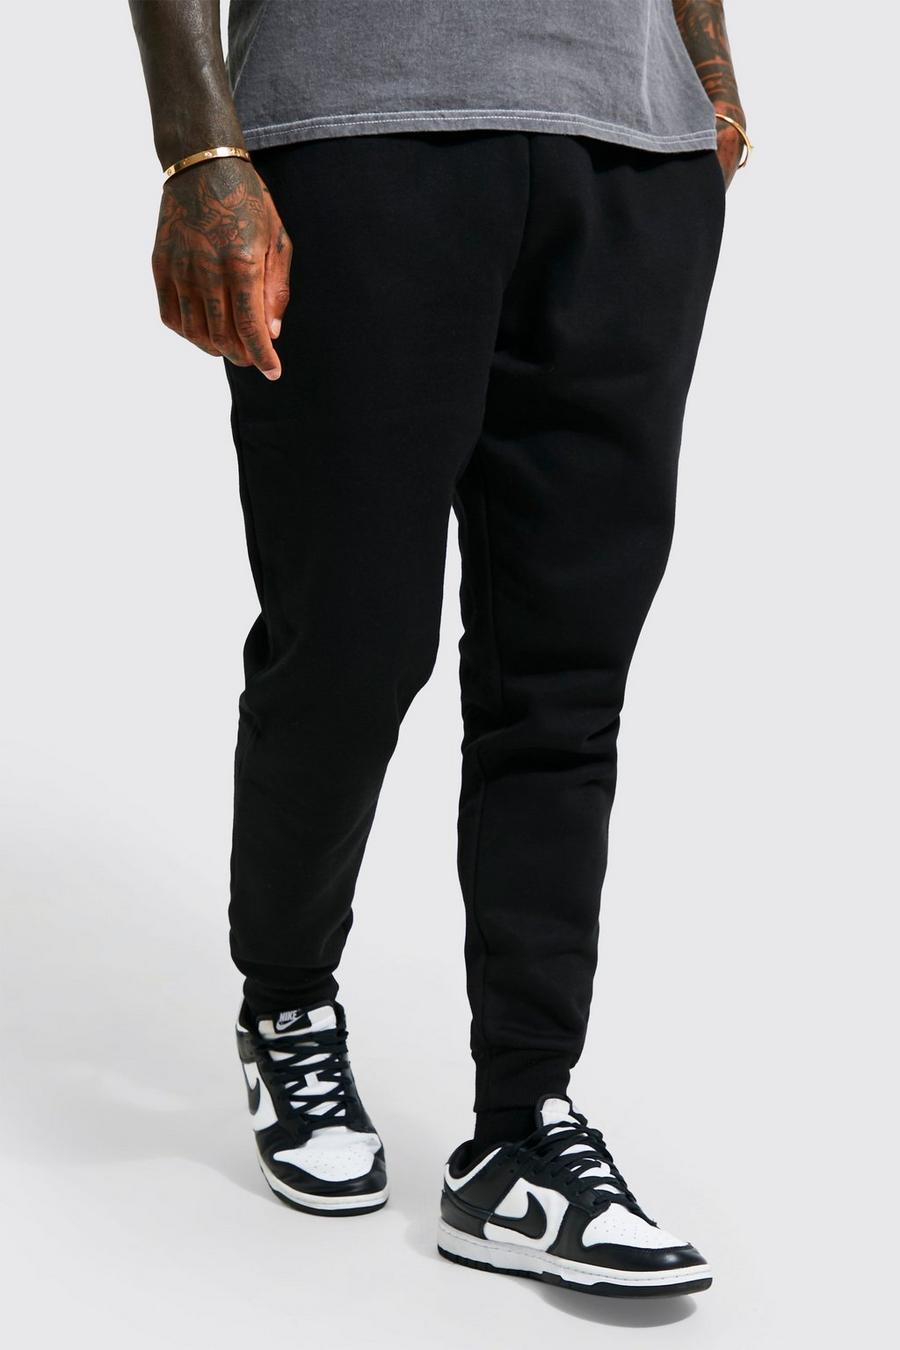 Pantalón deportivo básico ajustado, Black nero